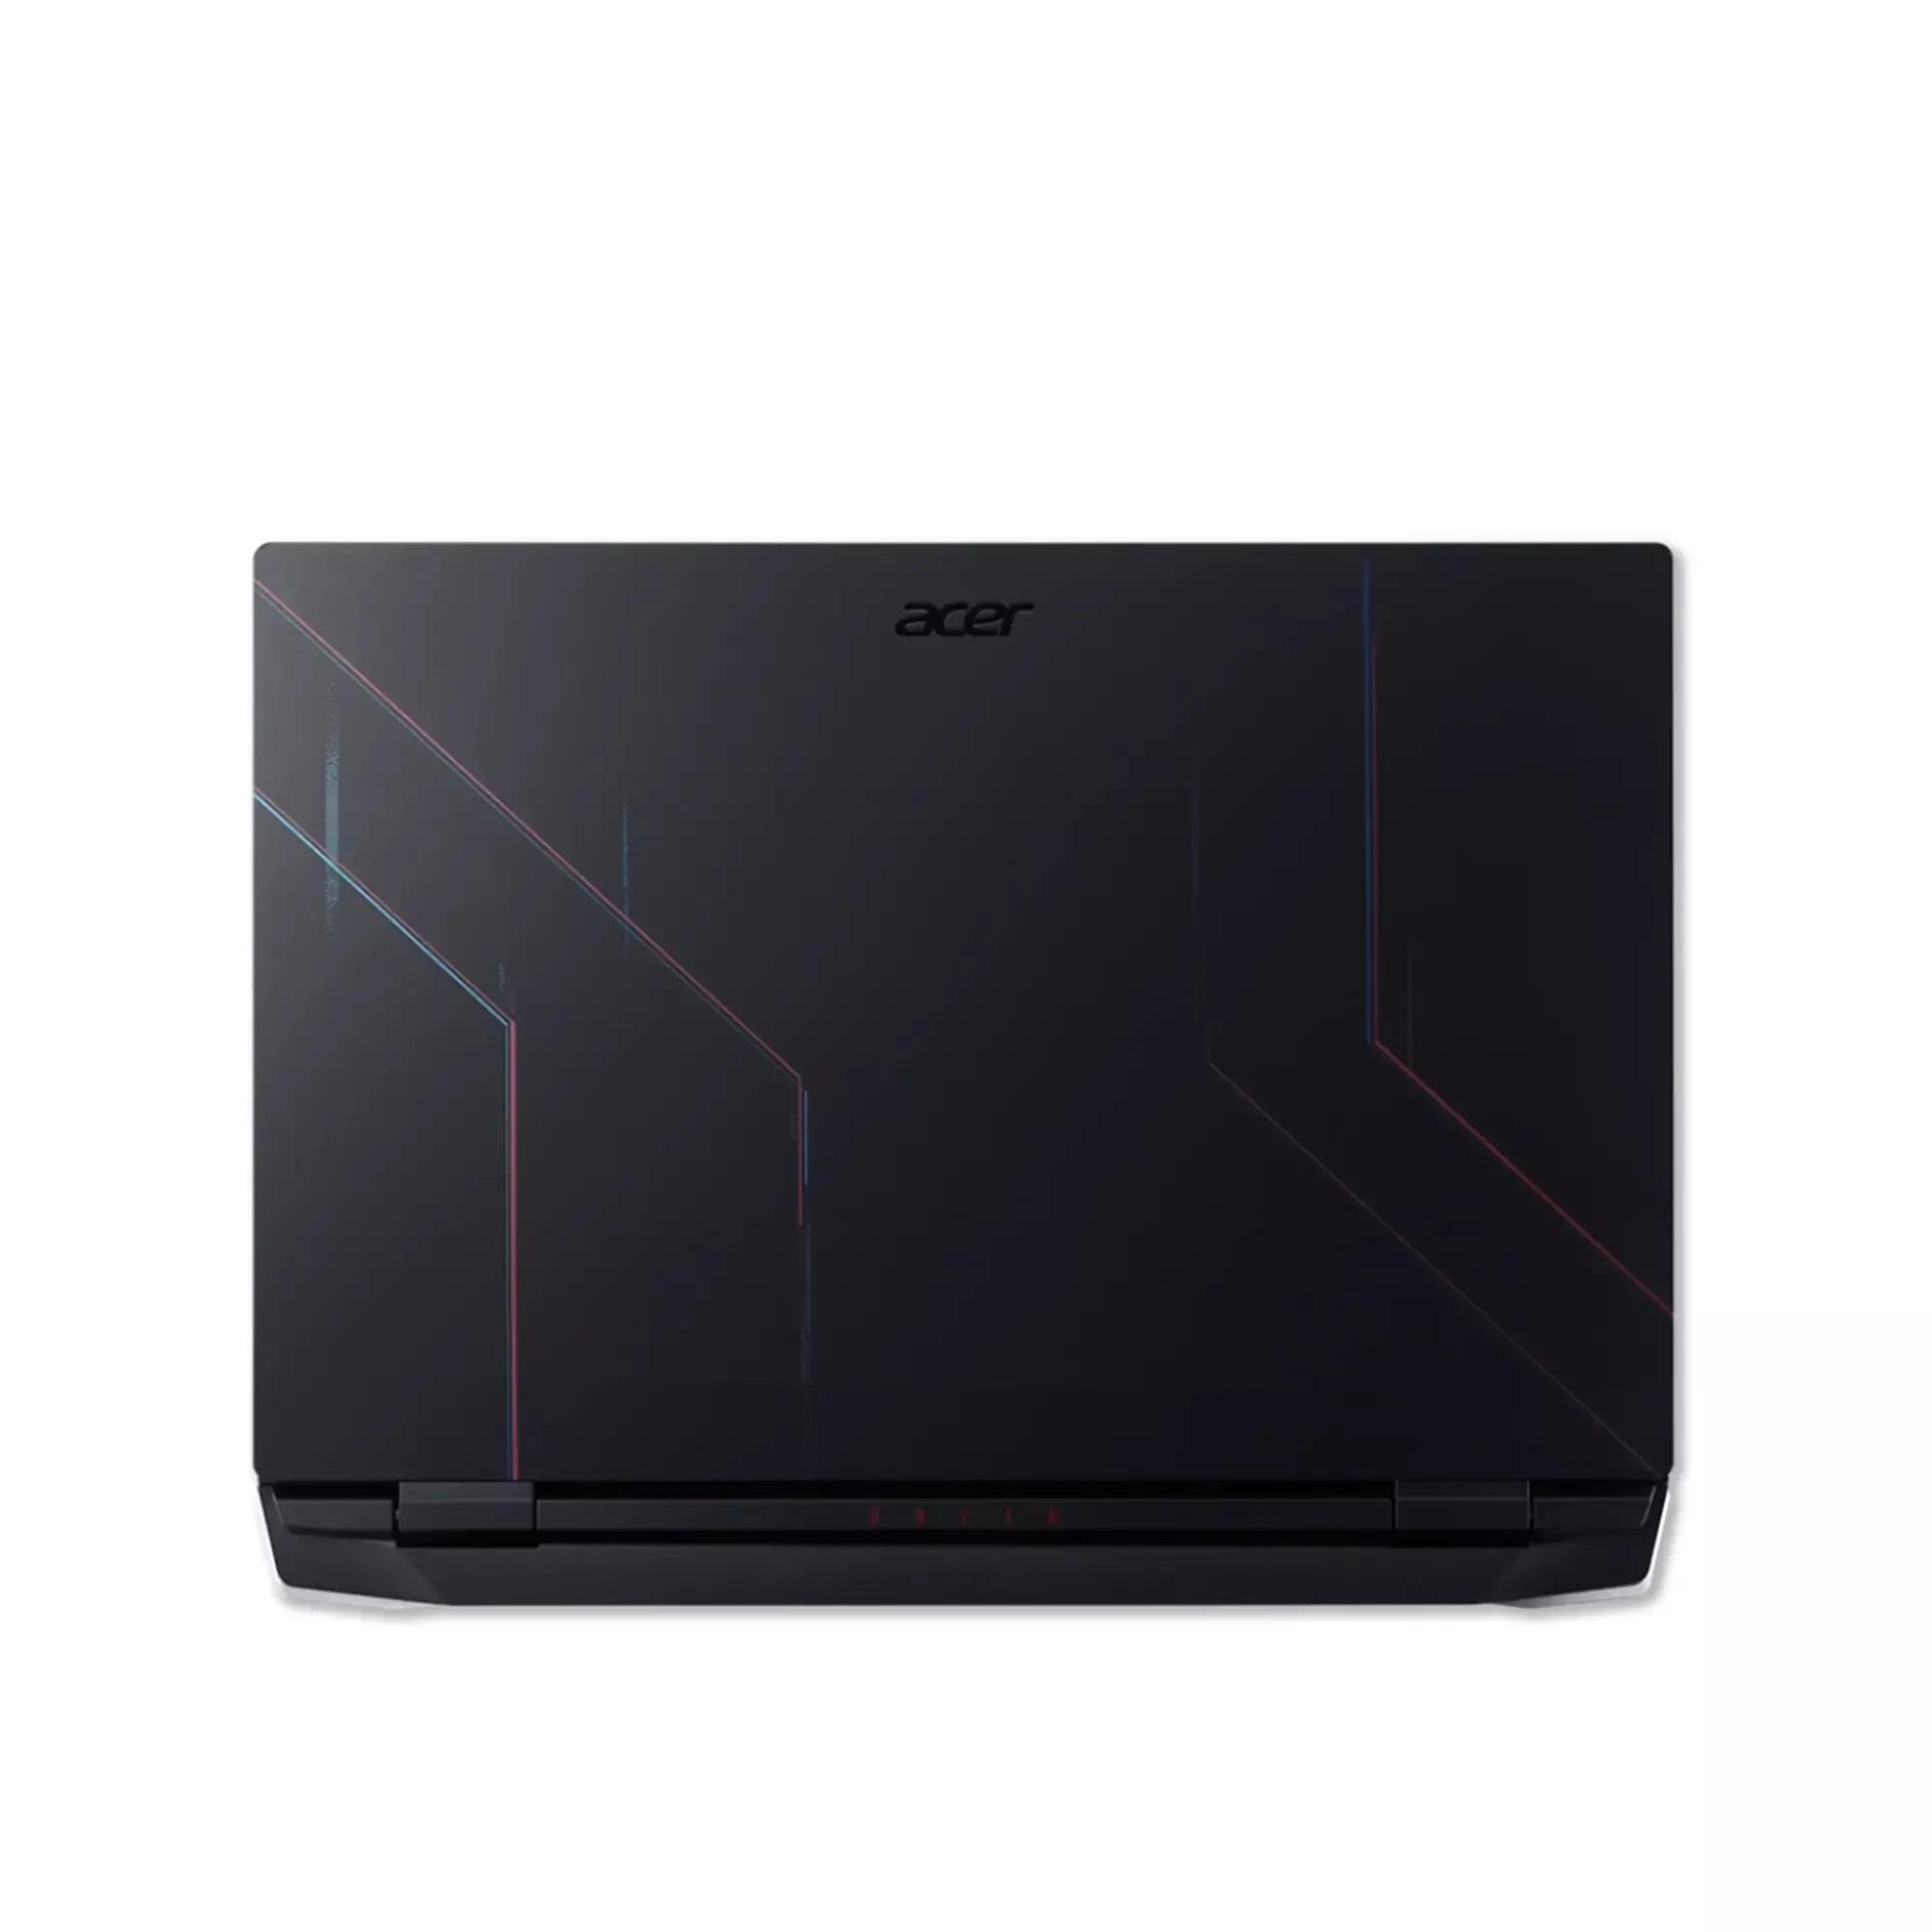 Acer Nitro 5 2022 AMD Ryzen 7 6800H / RTX 3060 / 16GB RAM / 512 SSD / 15.6" FHD 144Hz display